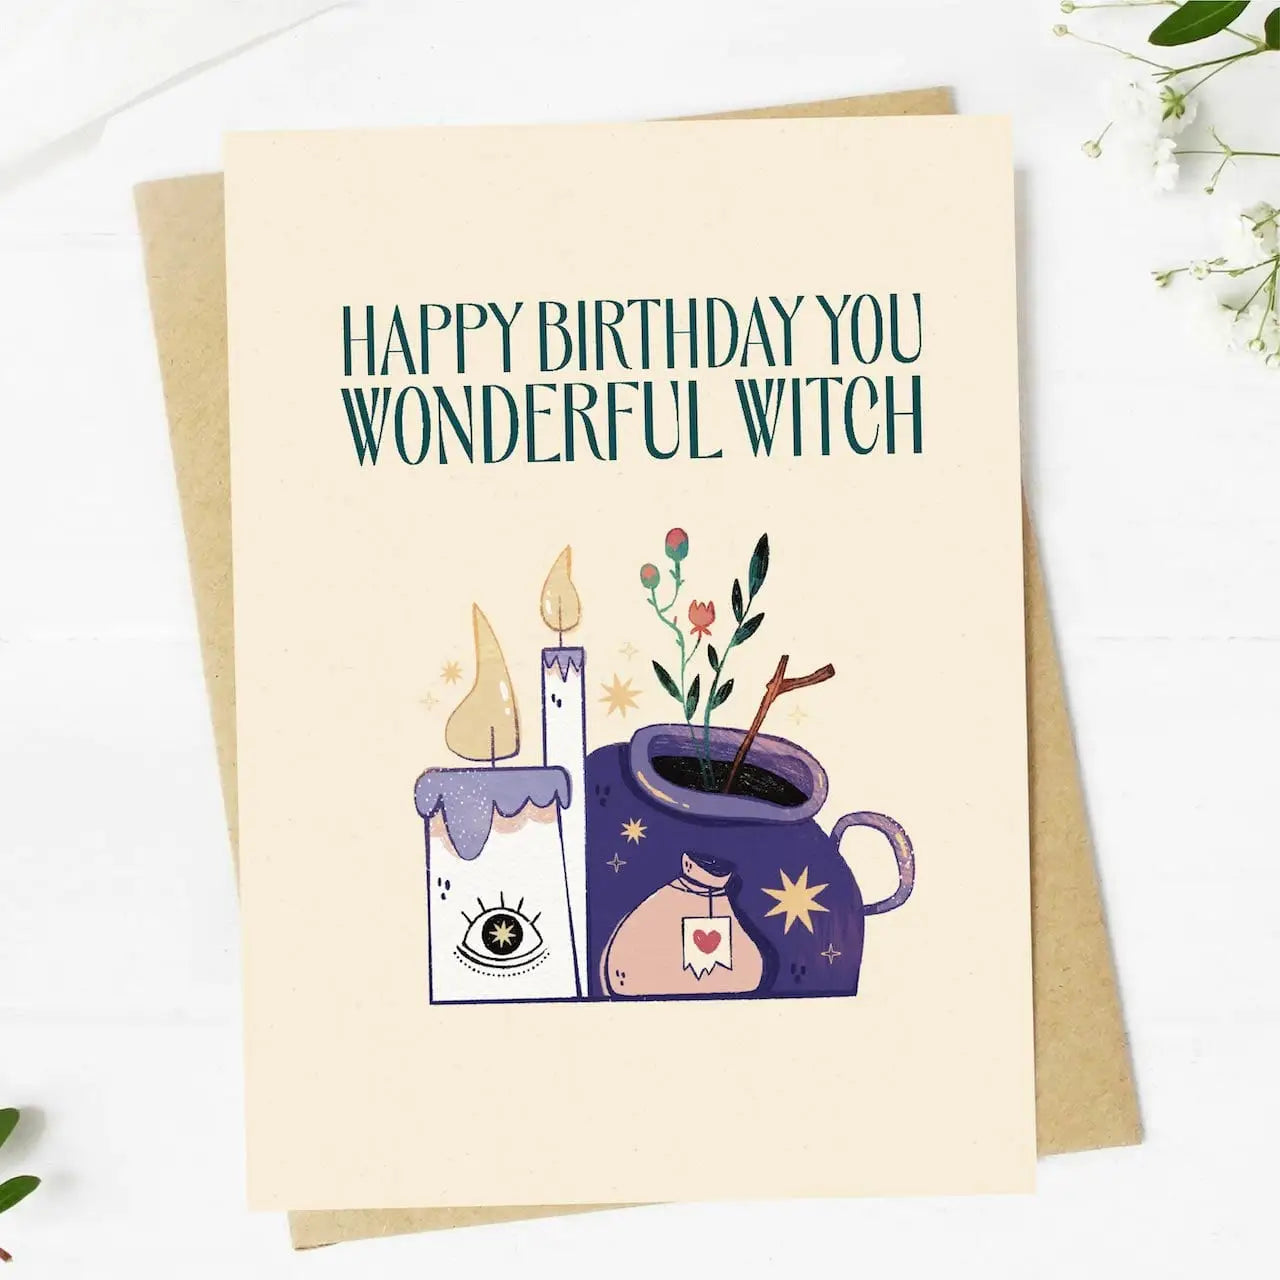 Happy Birthday Wonderful Witch - Greeting Card